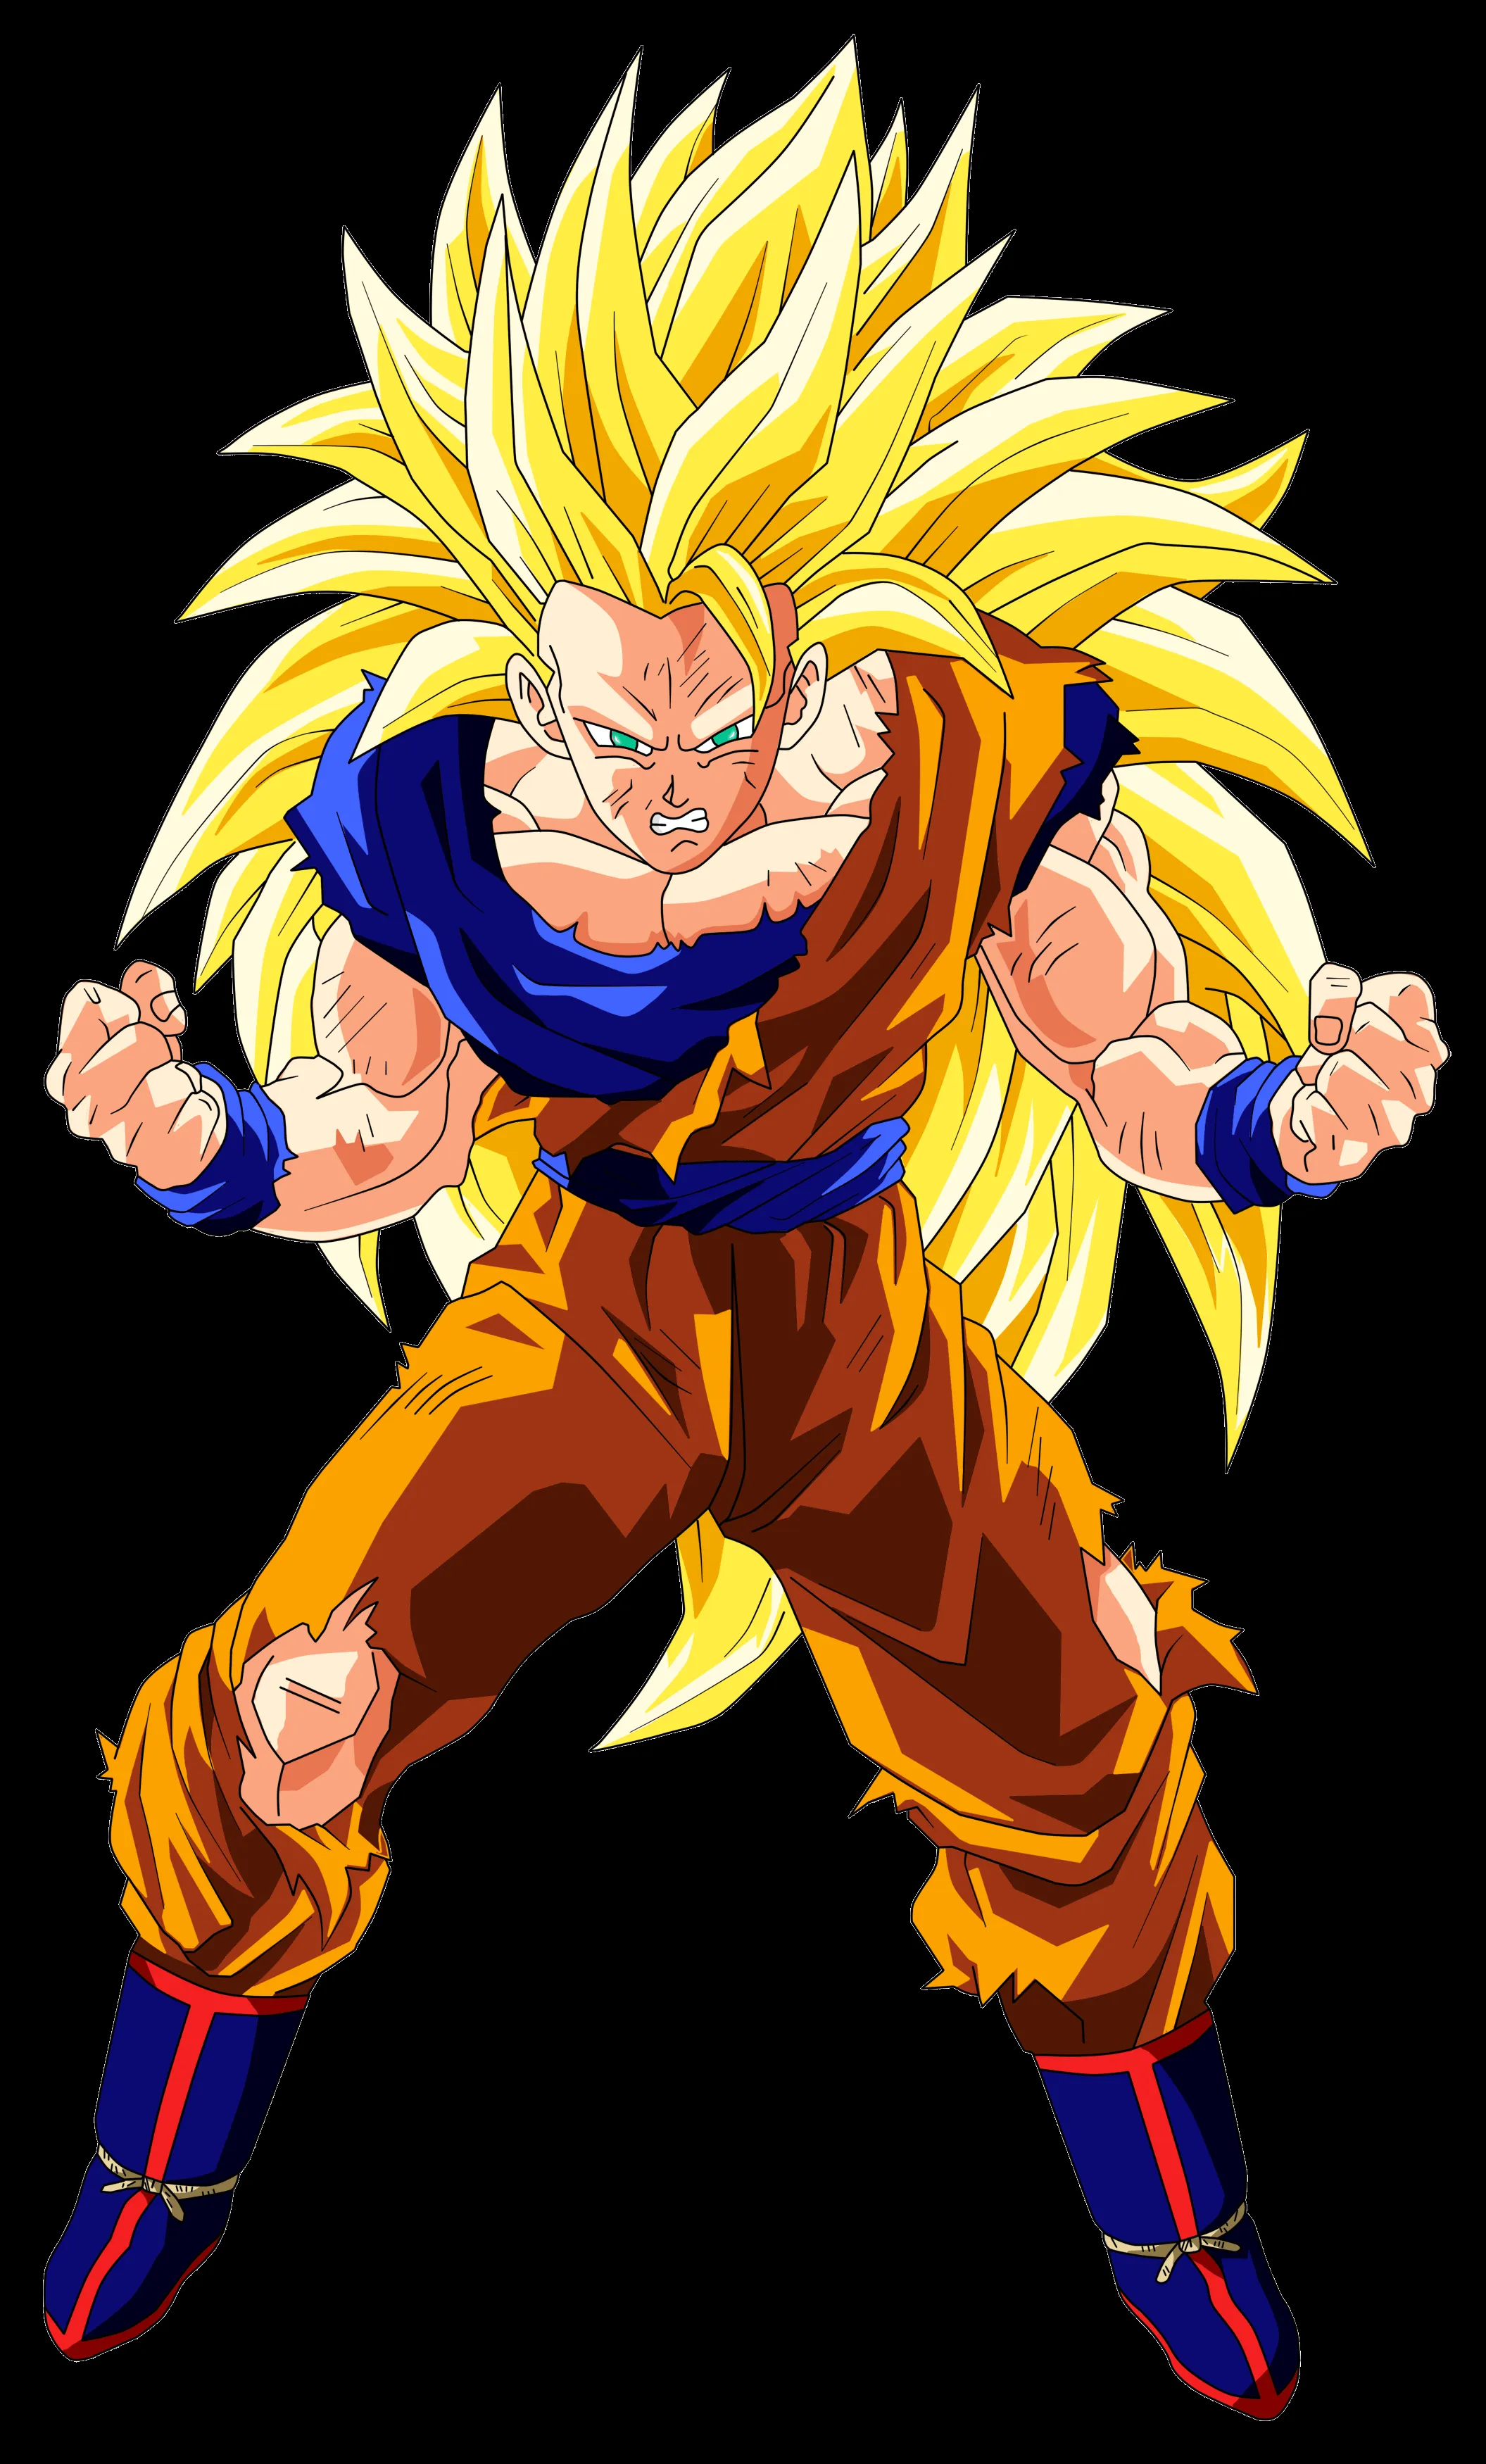 Goku Super Saiyan 3 by OriginalSuperSaiyan on DeviantArt